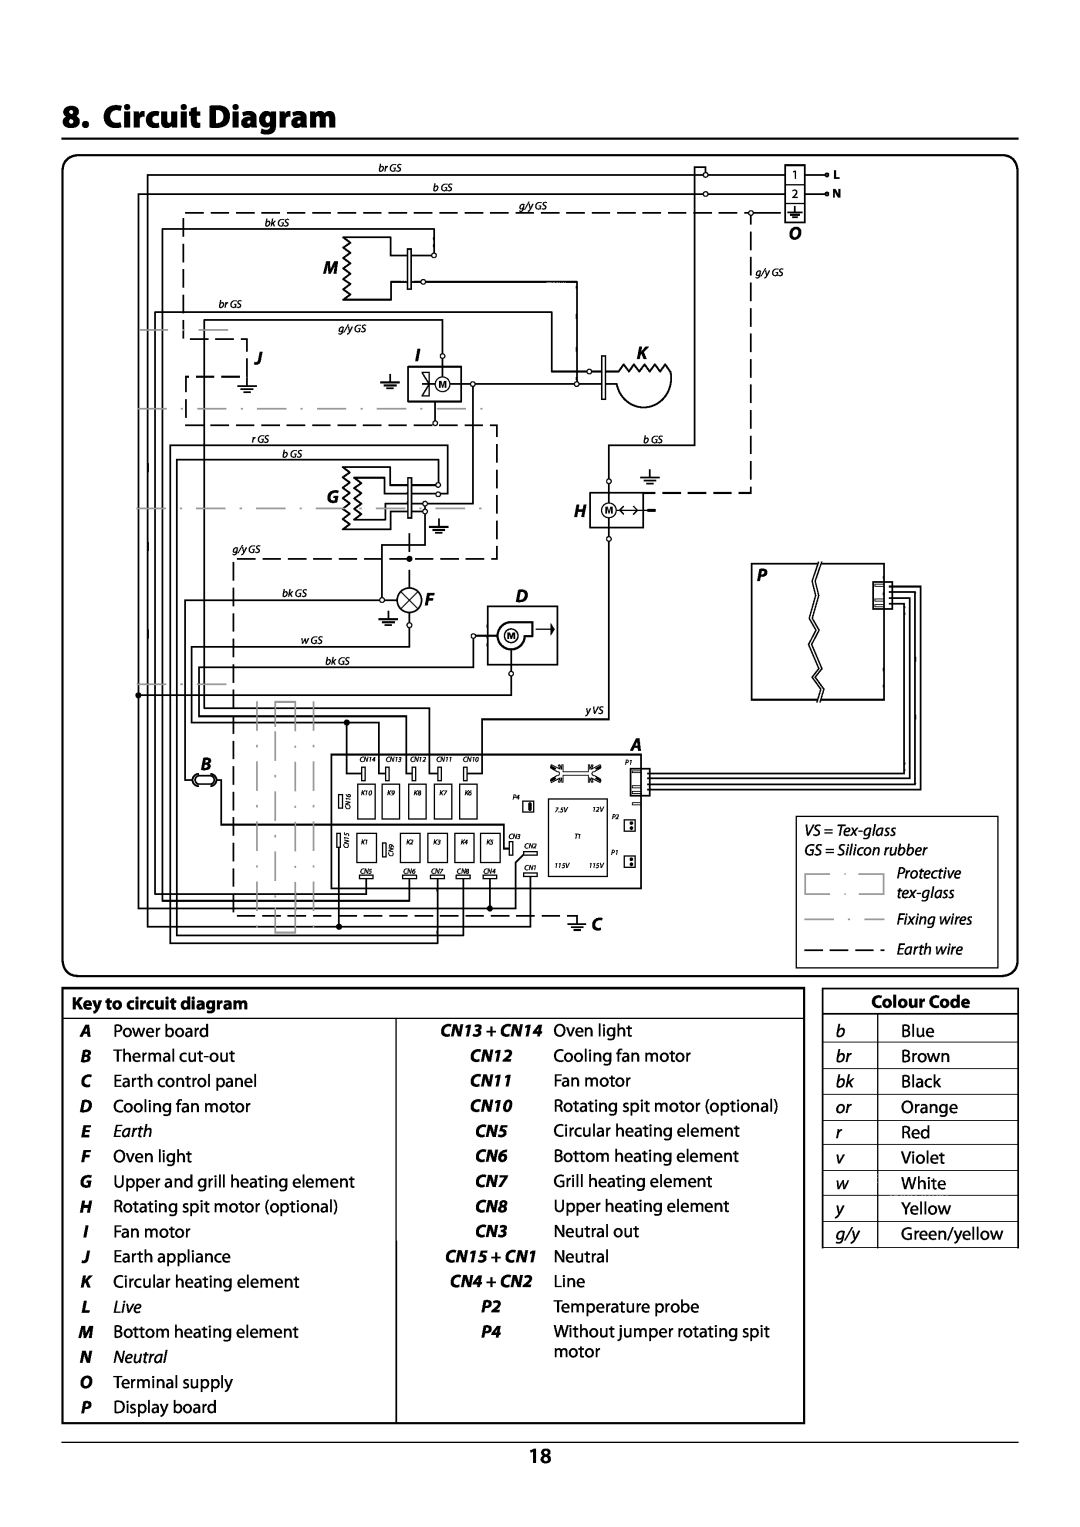 Rangemaster manual Circuit Diagram, DocNo.094-0003- Circuit diagram R6012 oven, Earth, Live, Neutral 